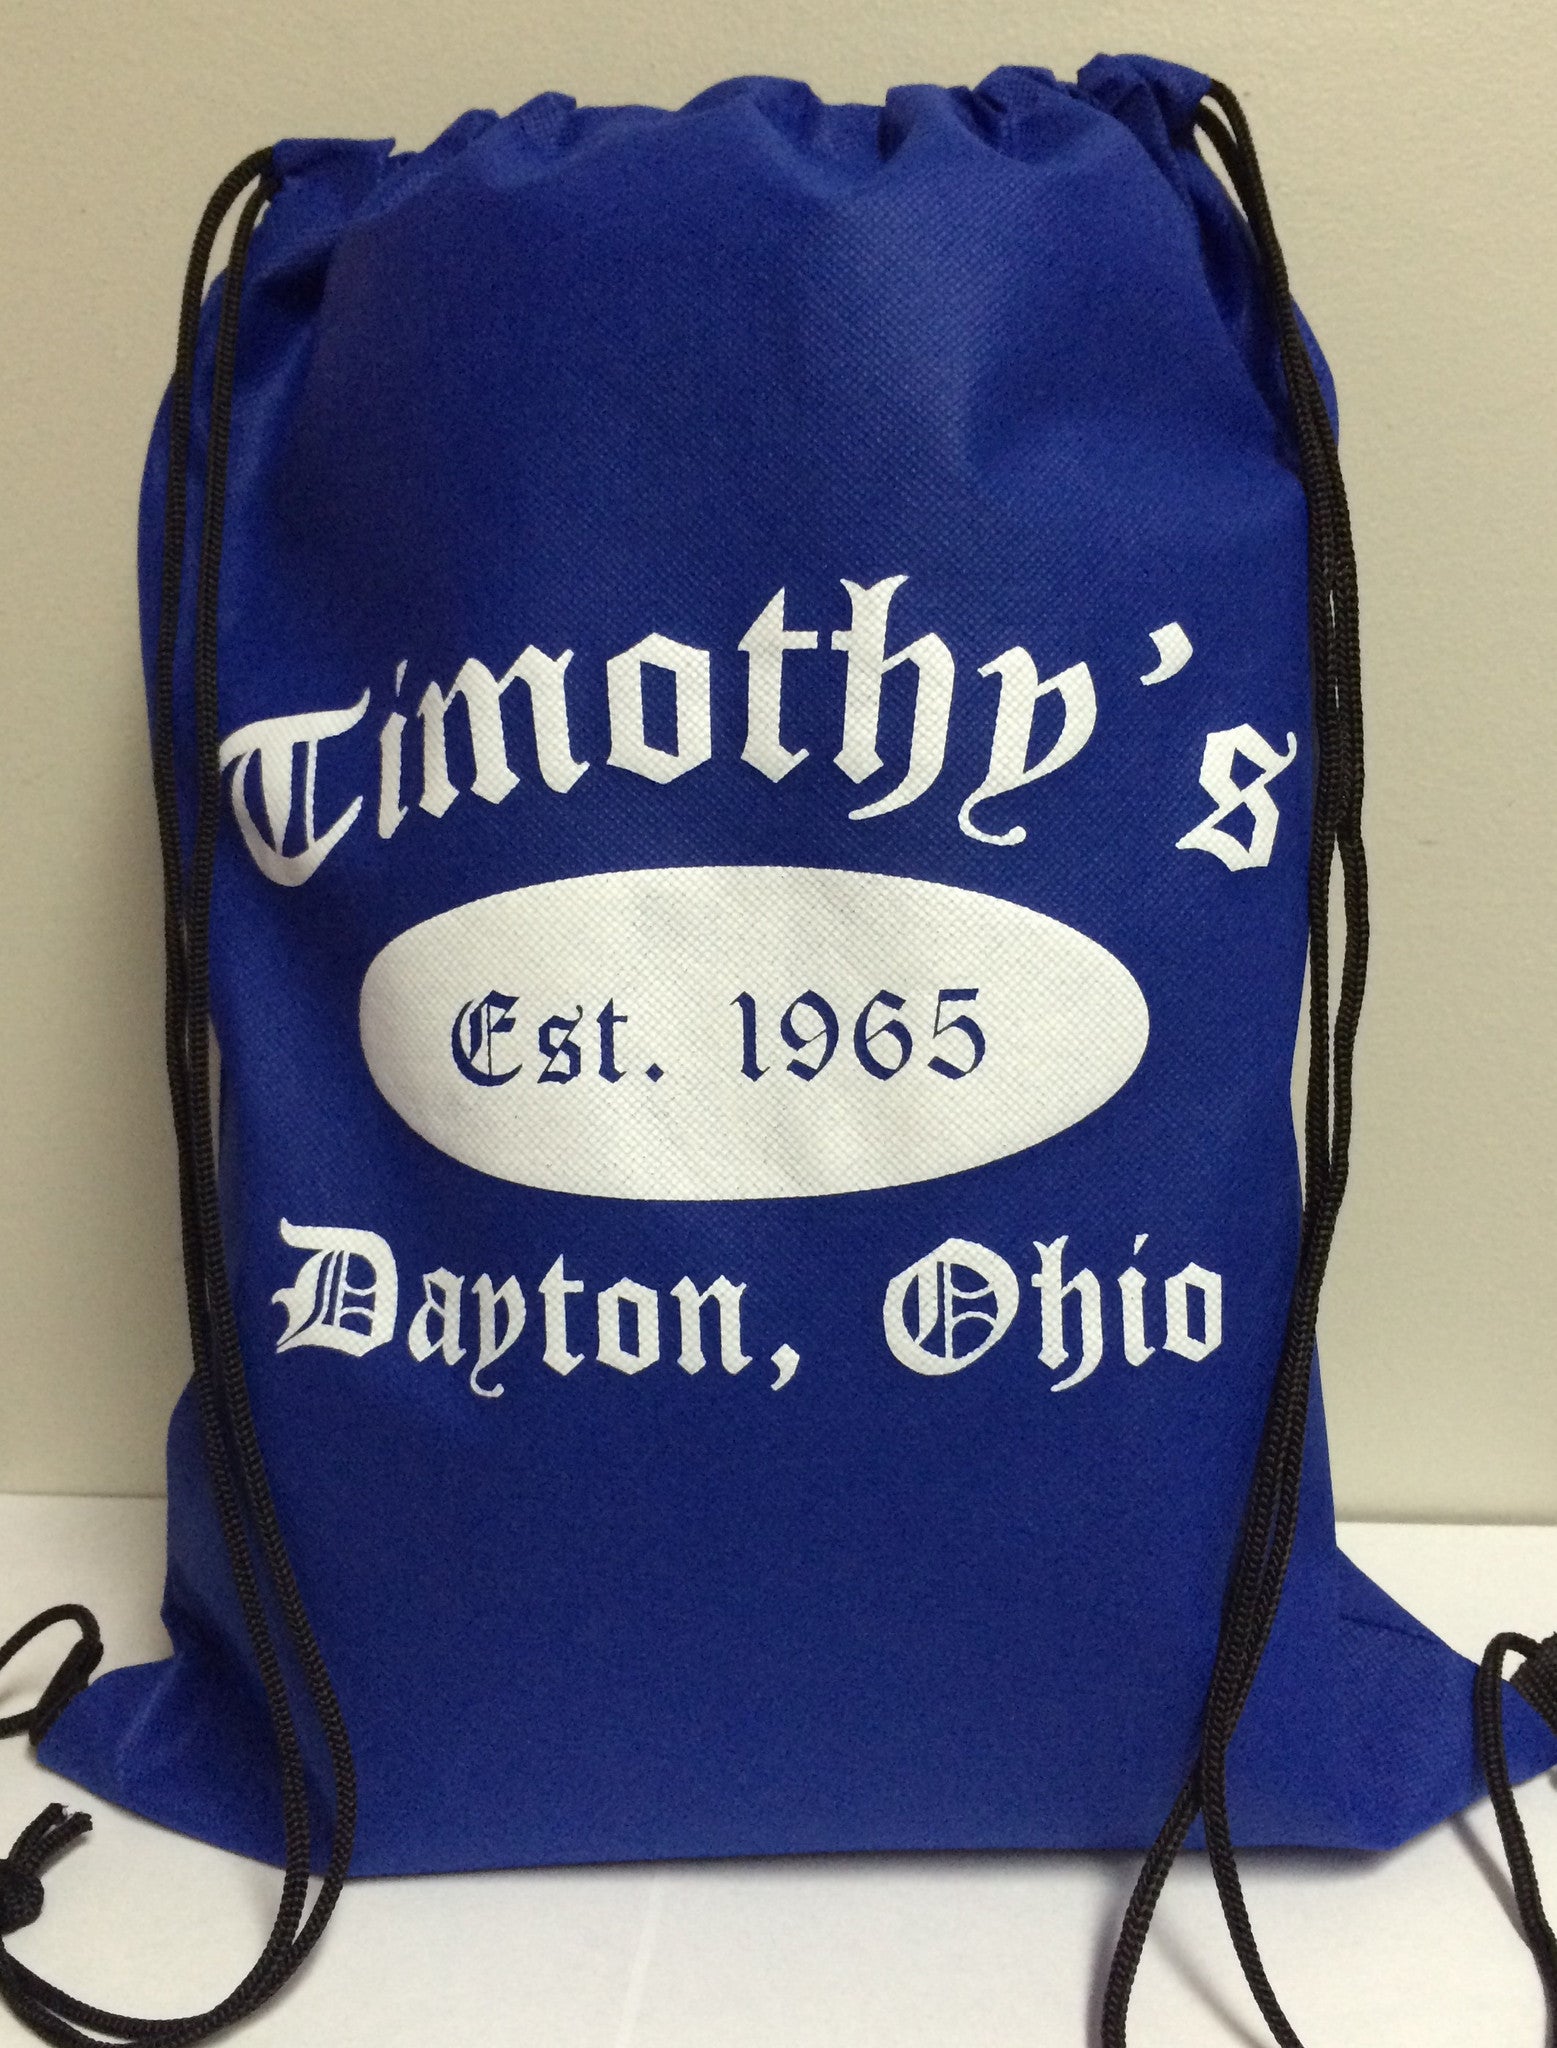 Timothy's Drawstring Backpack